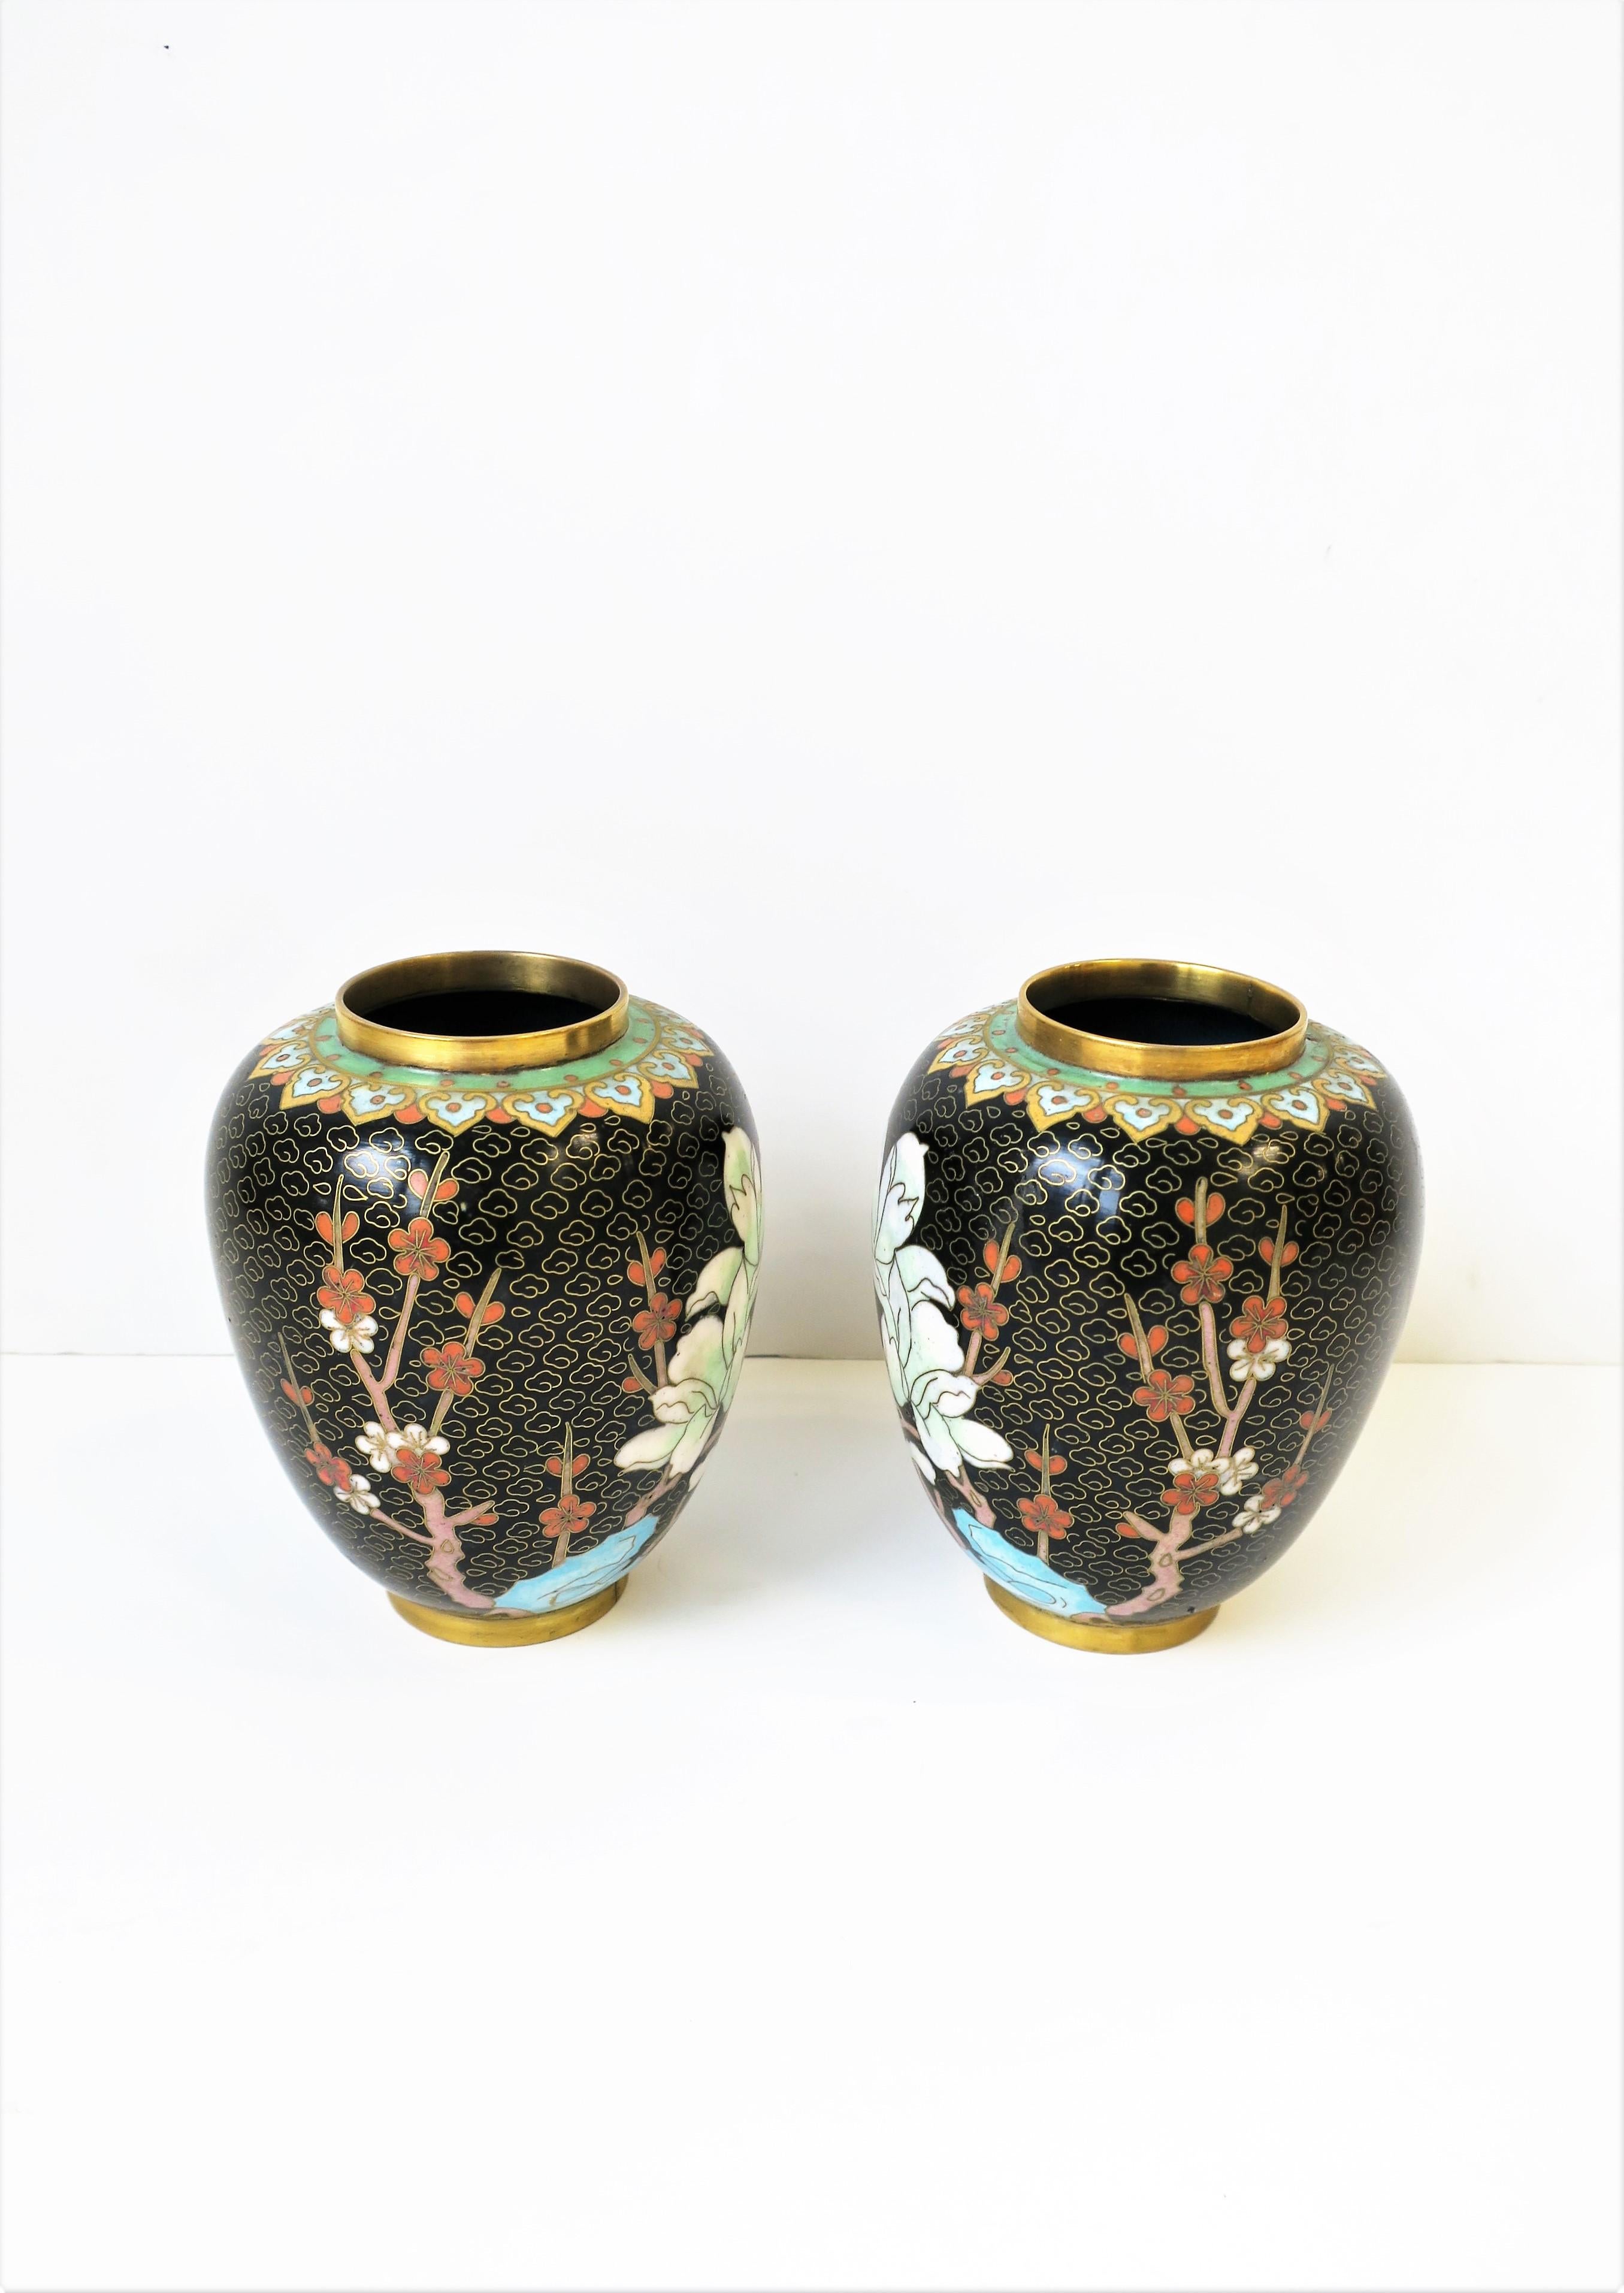 20th Century Cloisonné́ Enamel and Brass Flower Vases Black Gold and Pastel Colors, Pair For Sale